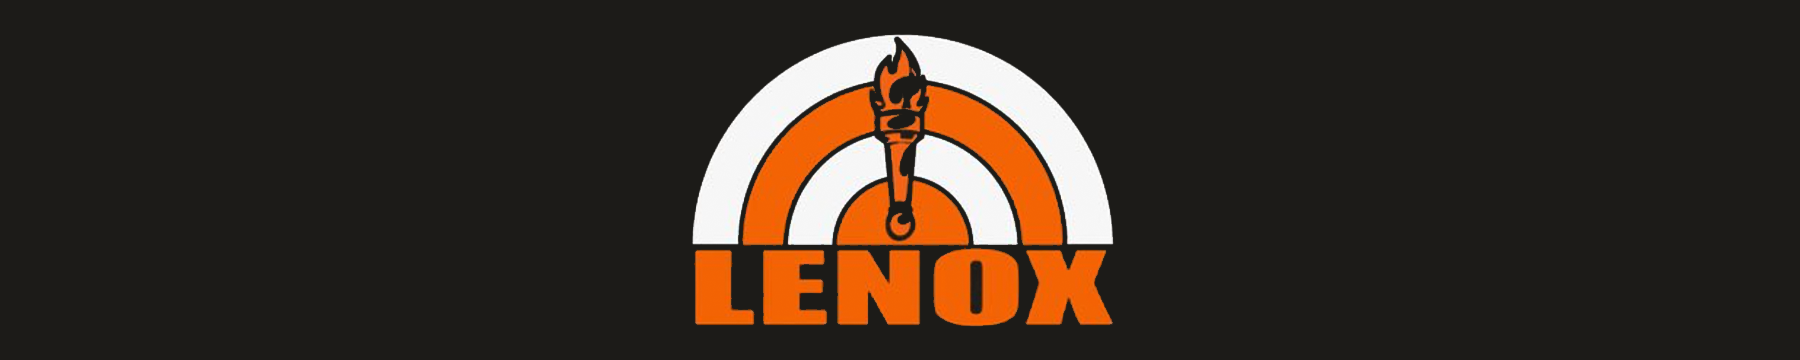 Camp Lenox